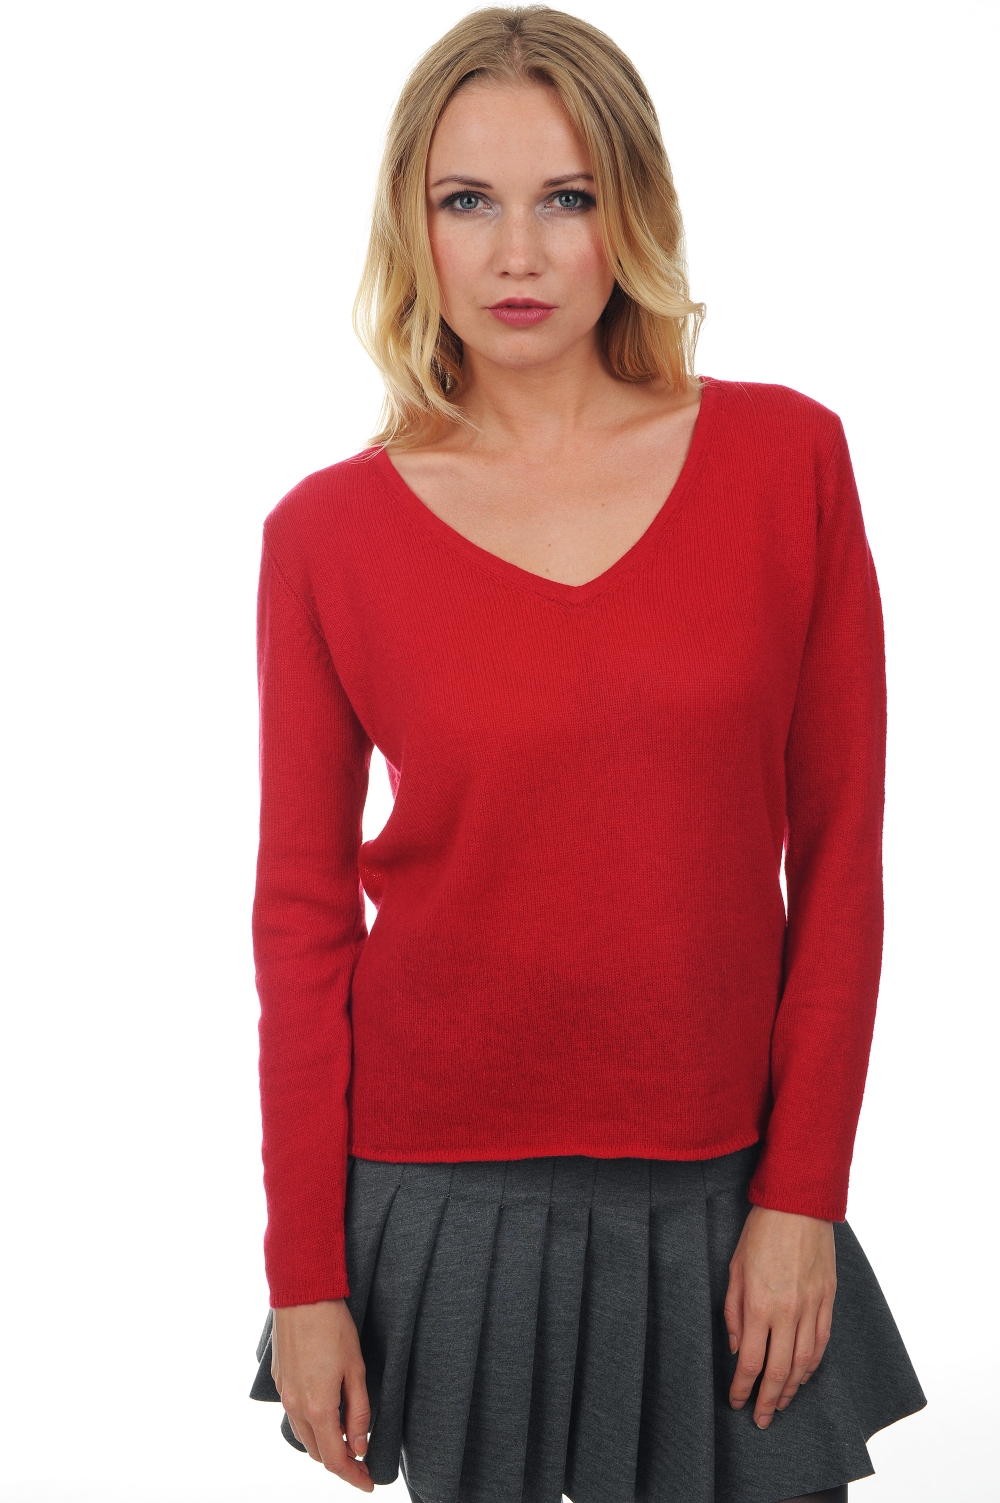 Cashmere cashmere donna essenziali low cost flavie rosso rubino 2xl